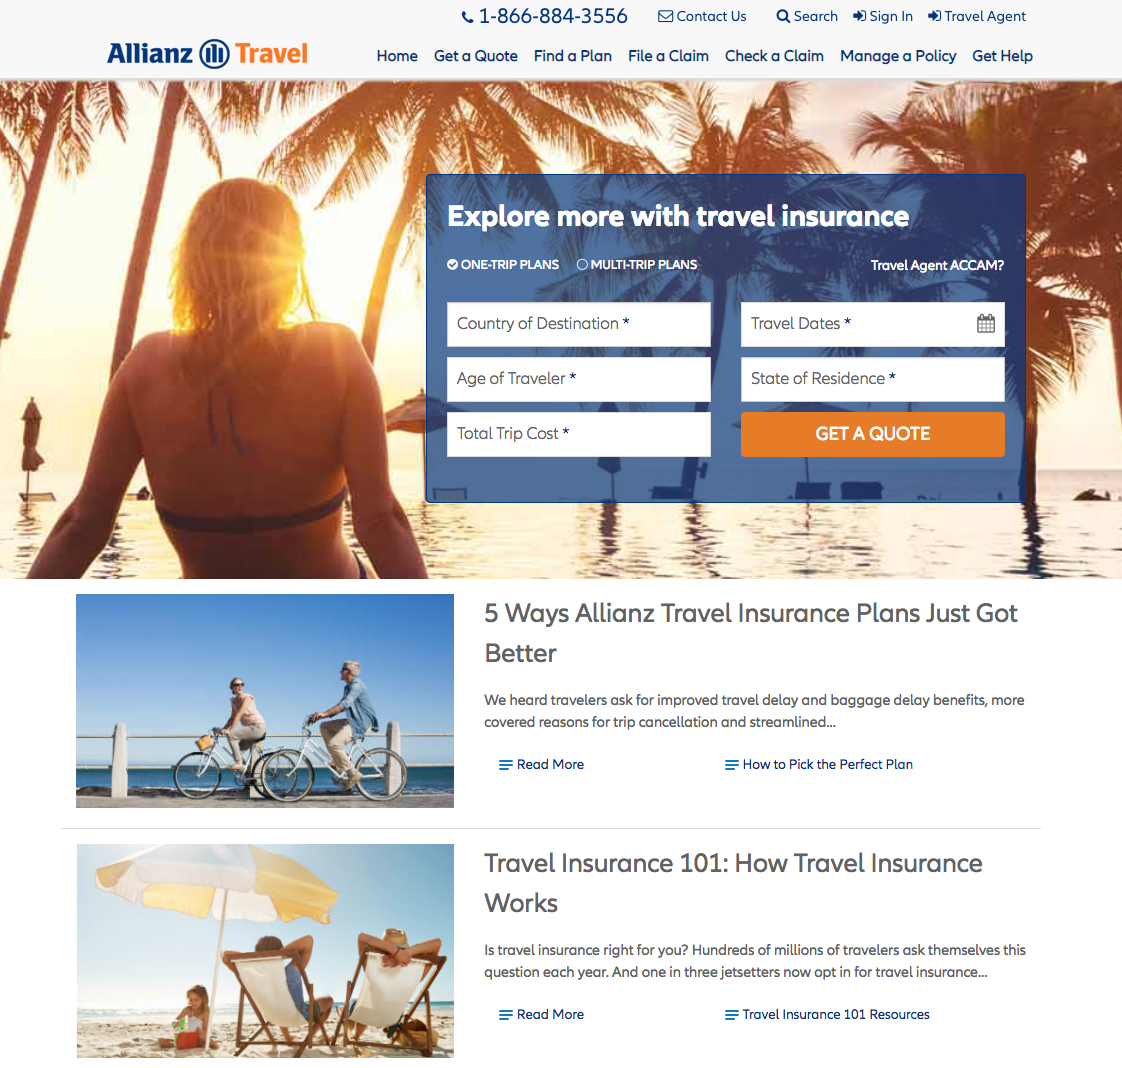 Allianz Global Assistance Rebrands to Allianz Travel